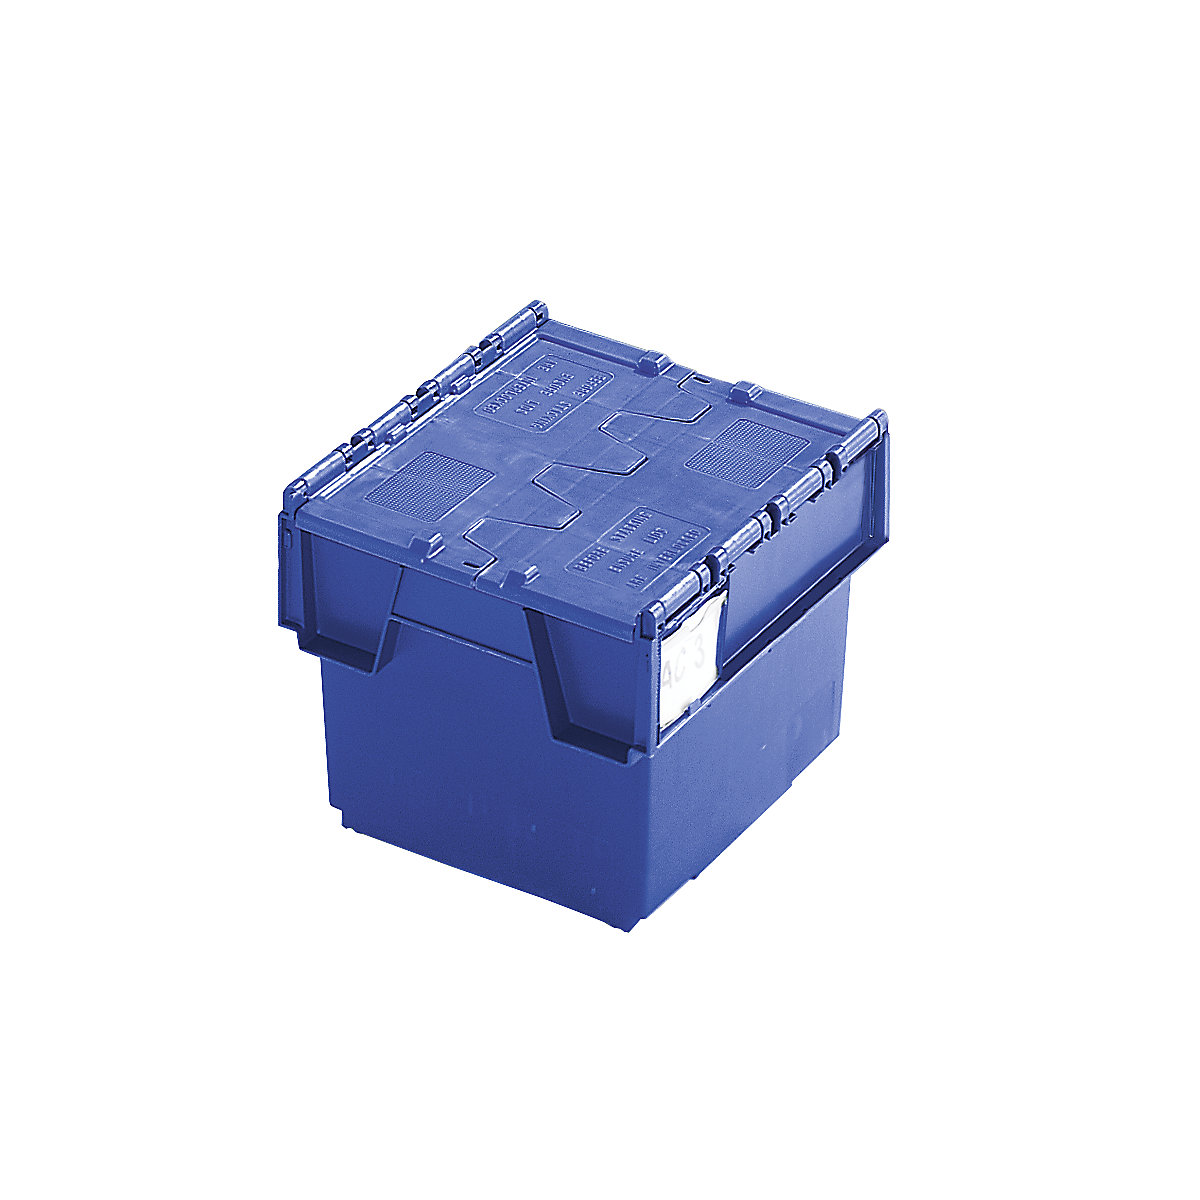 Contenitore multiuso impilabile KAIMAN, capacità 20 litri, lungh. x largh. x alt. 400 x 300 x 252 mm, blu